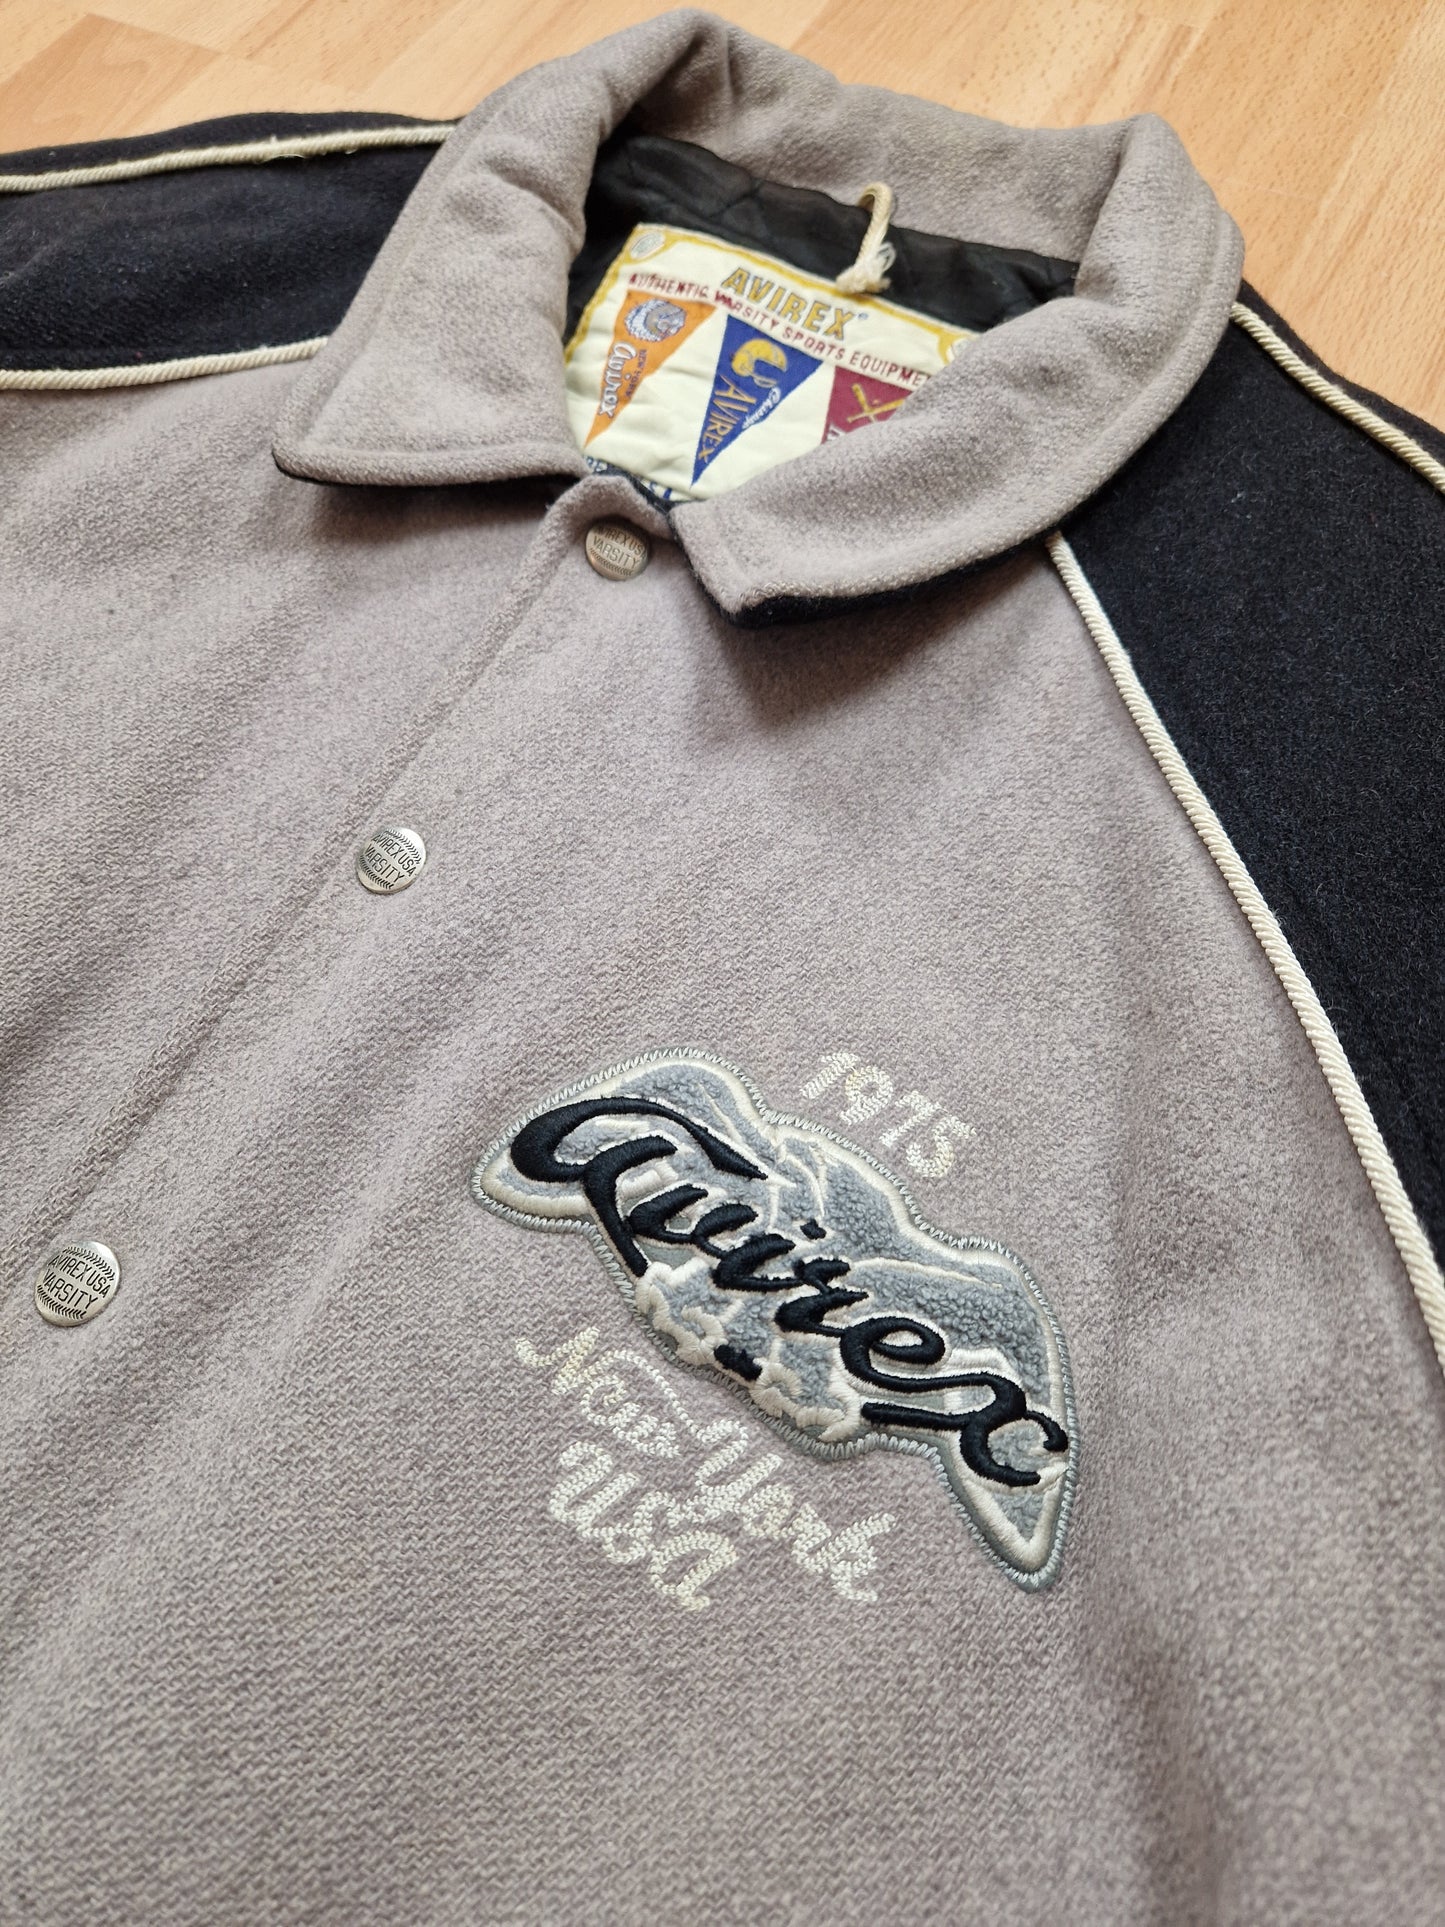 Vintage 90s Avirex Heavyweight Wool Varsity Jacket (XL)